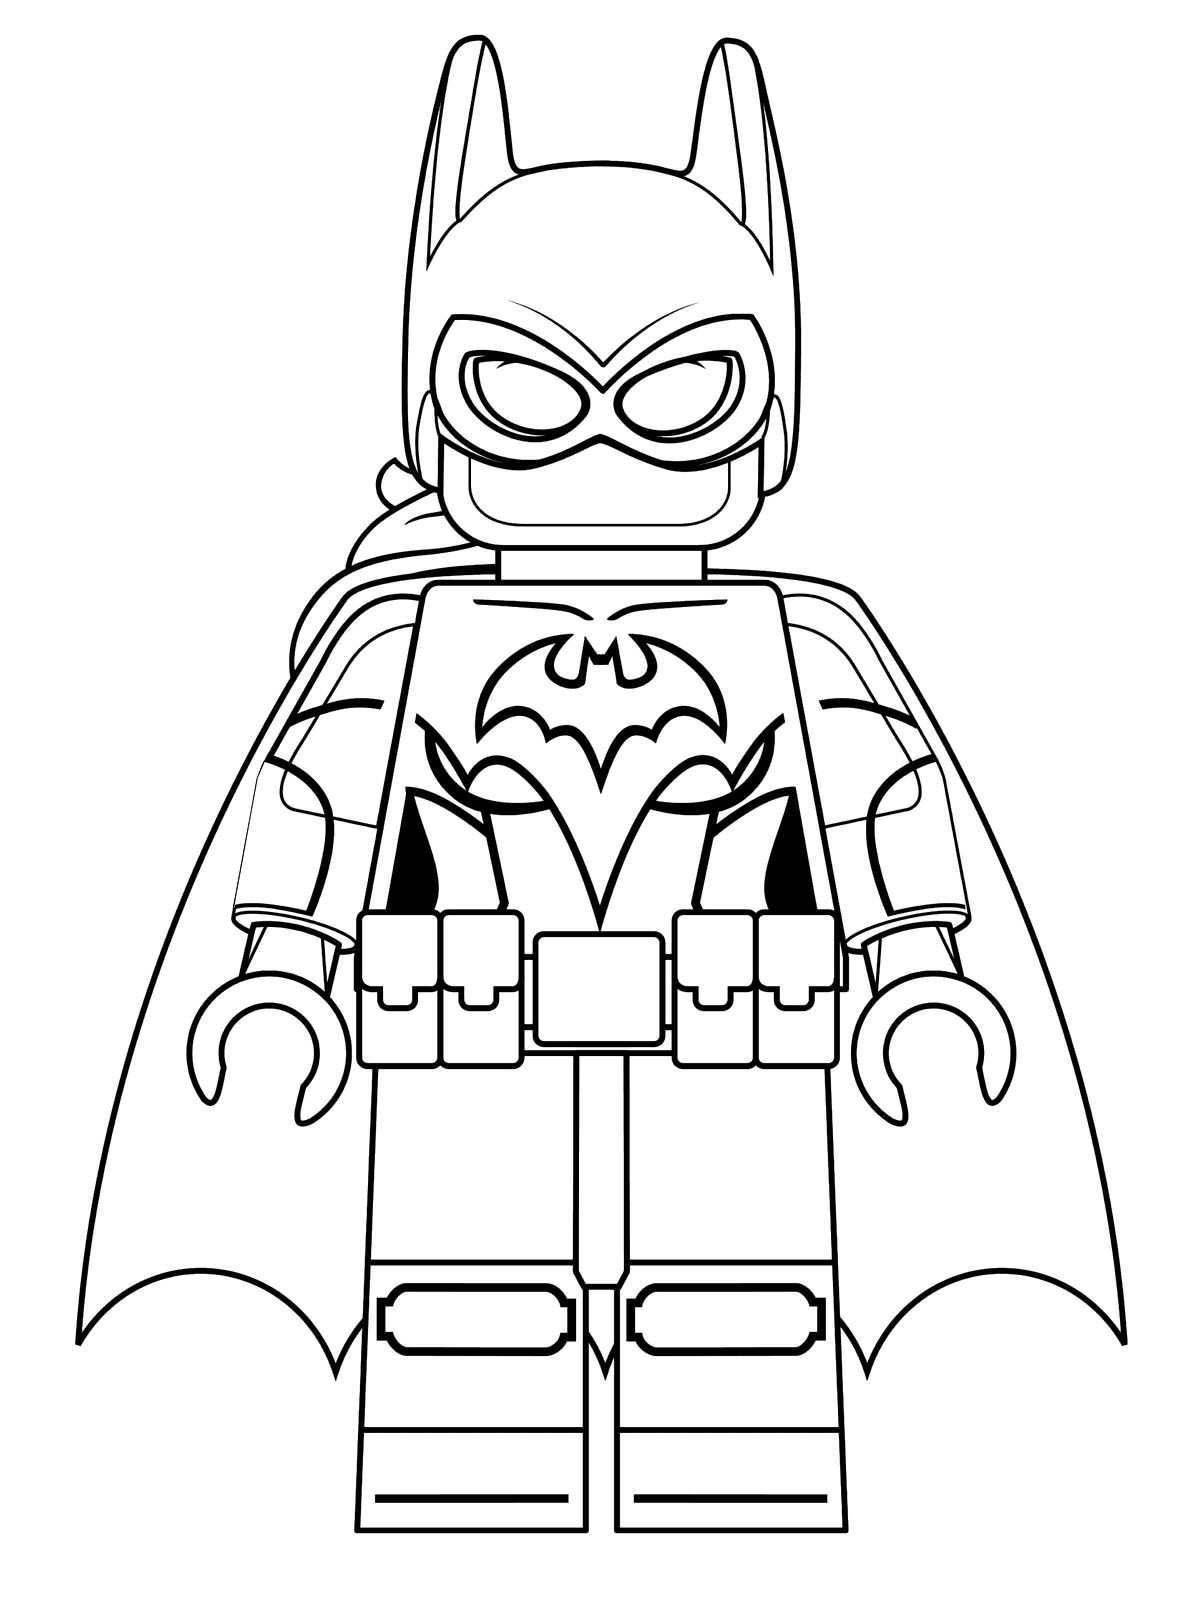 Fairy lego batman coloring page